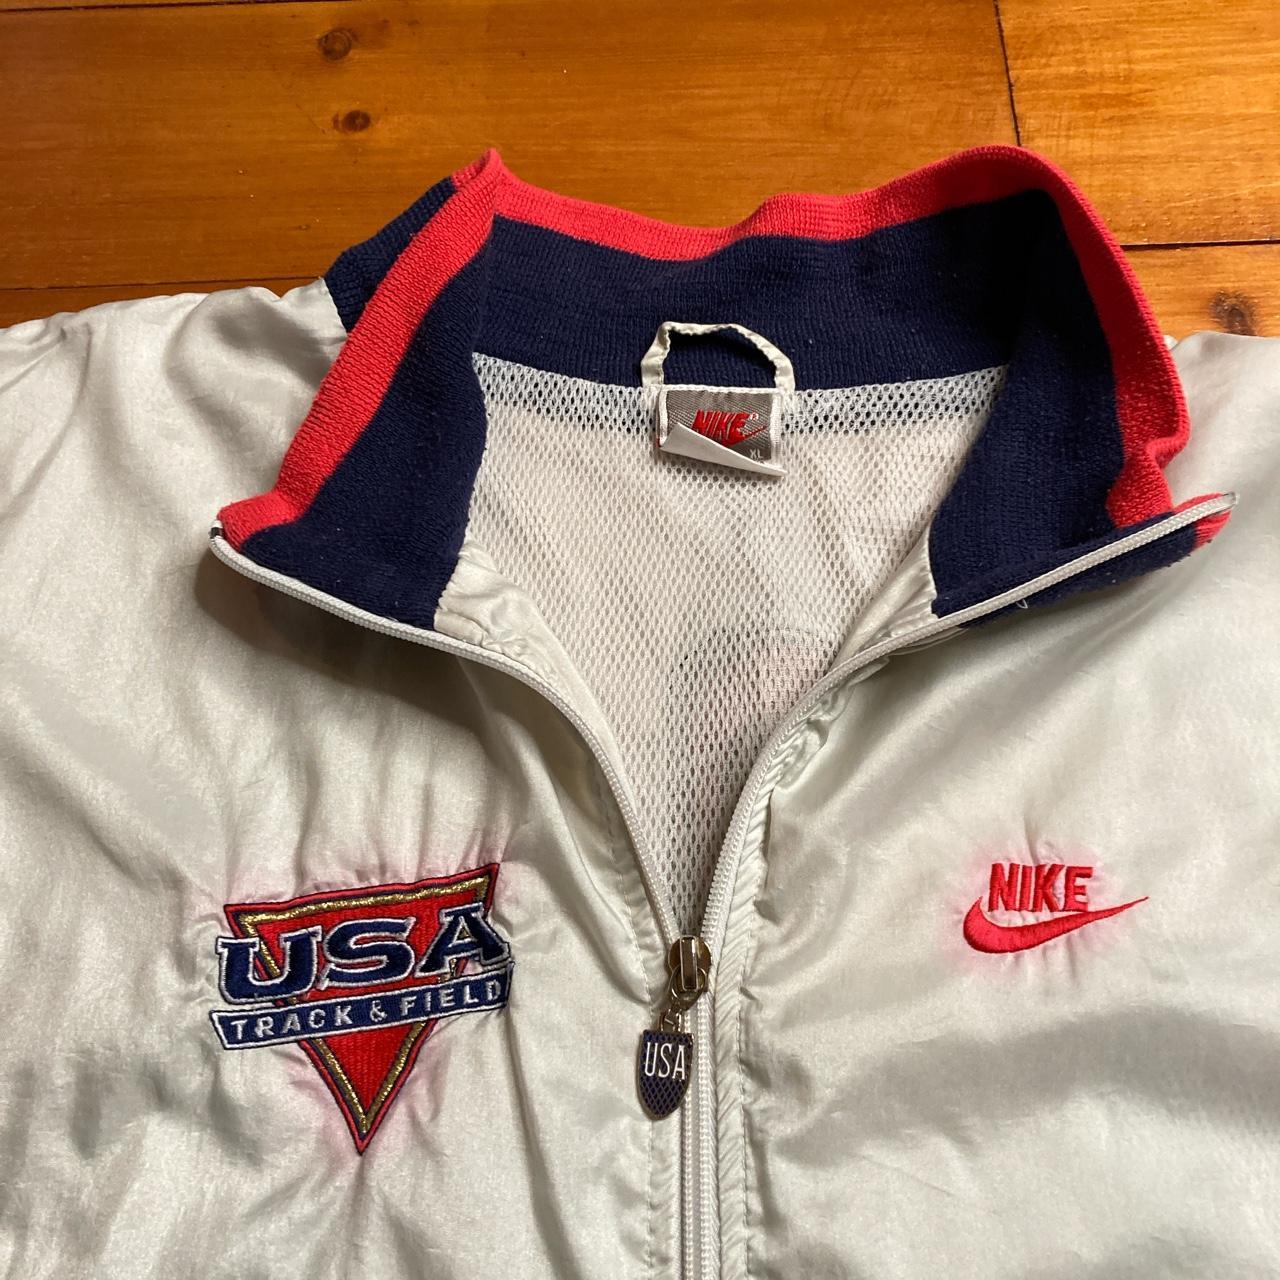 Nike USA track field vintage jacket Size L 27"...